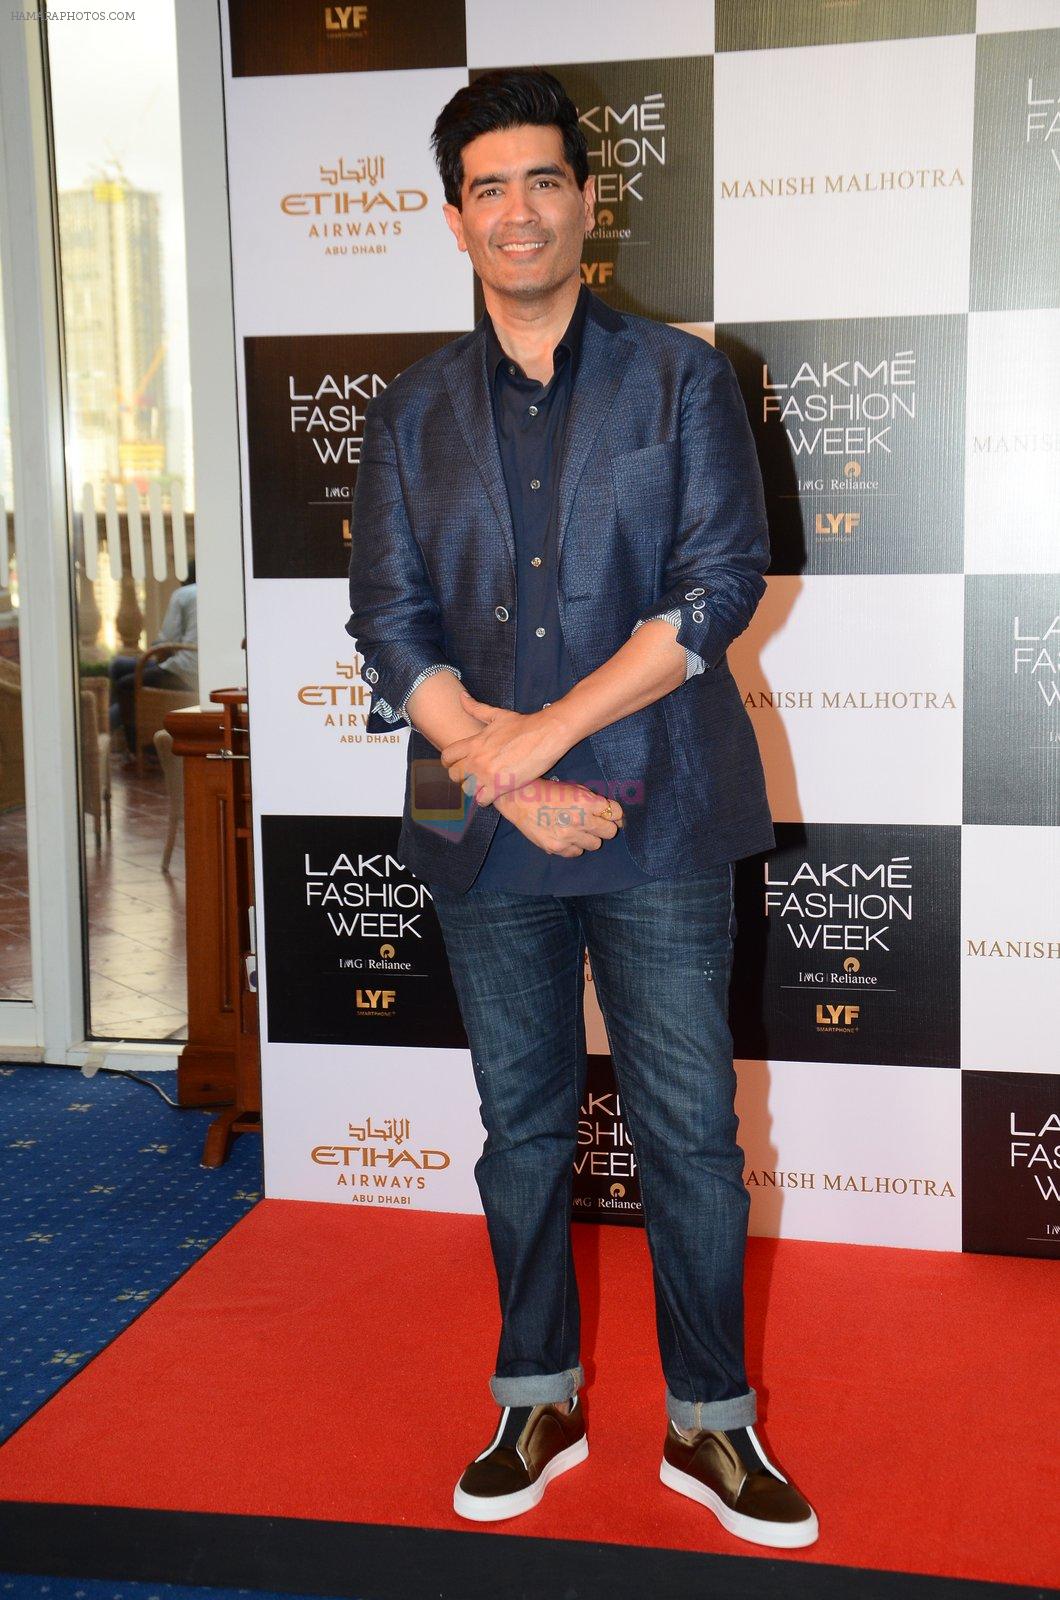 Manish Malhotra Lakme preview in Mumbai on 16th AUg 2016